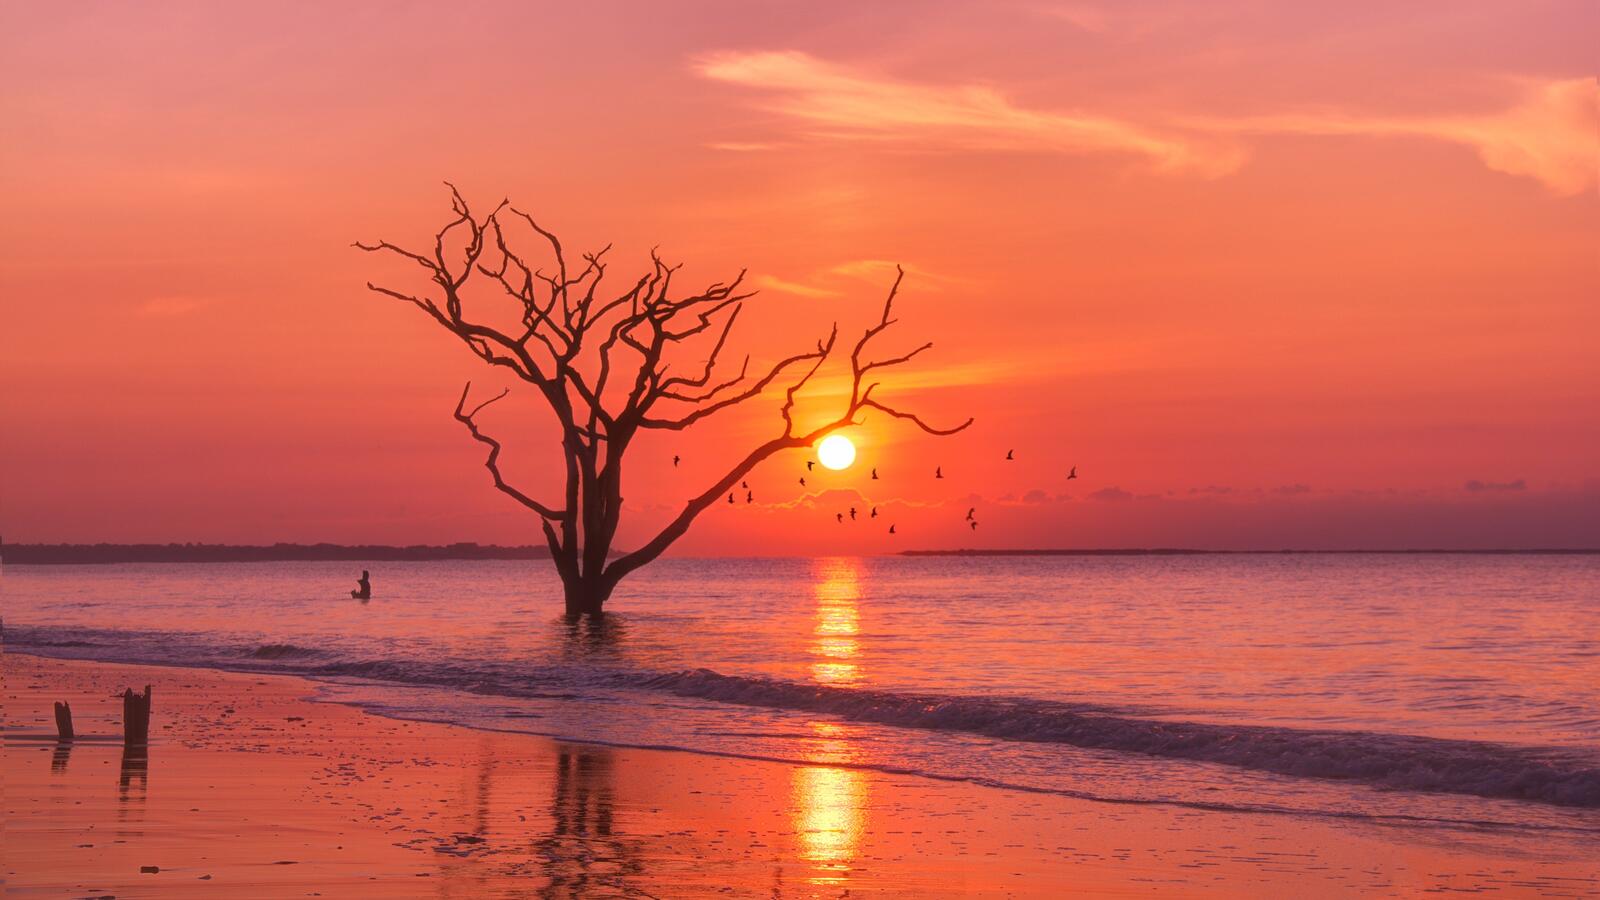 Бесплатное фото Дерево растет в море на берегу